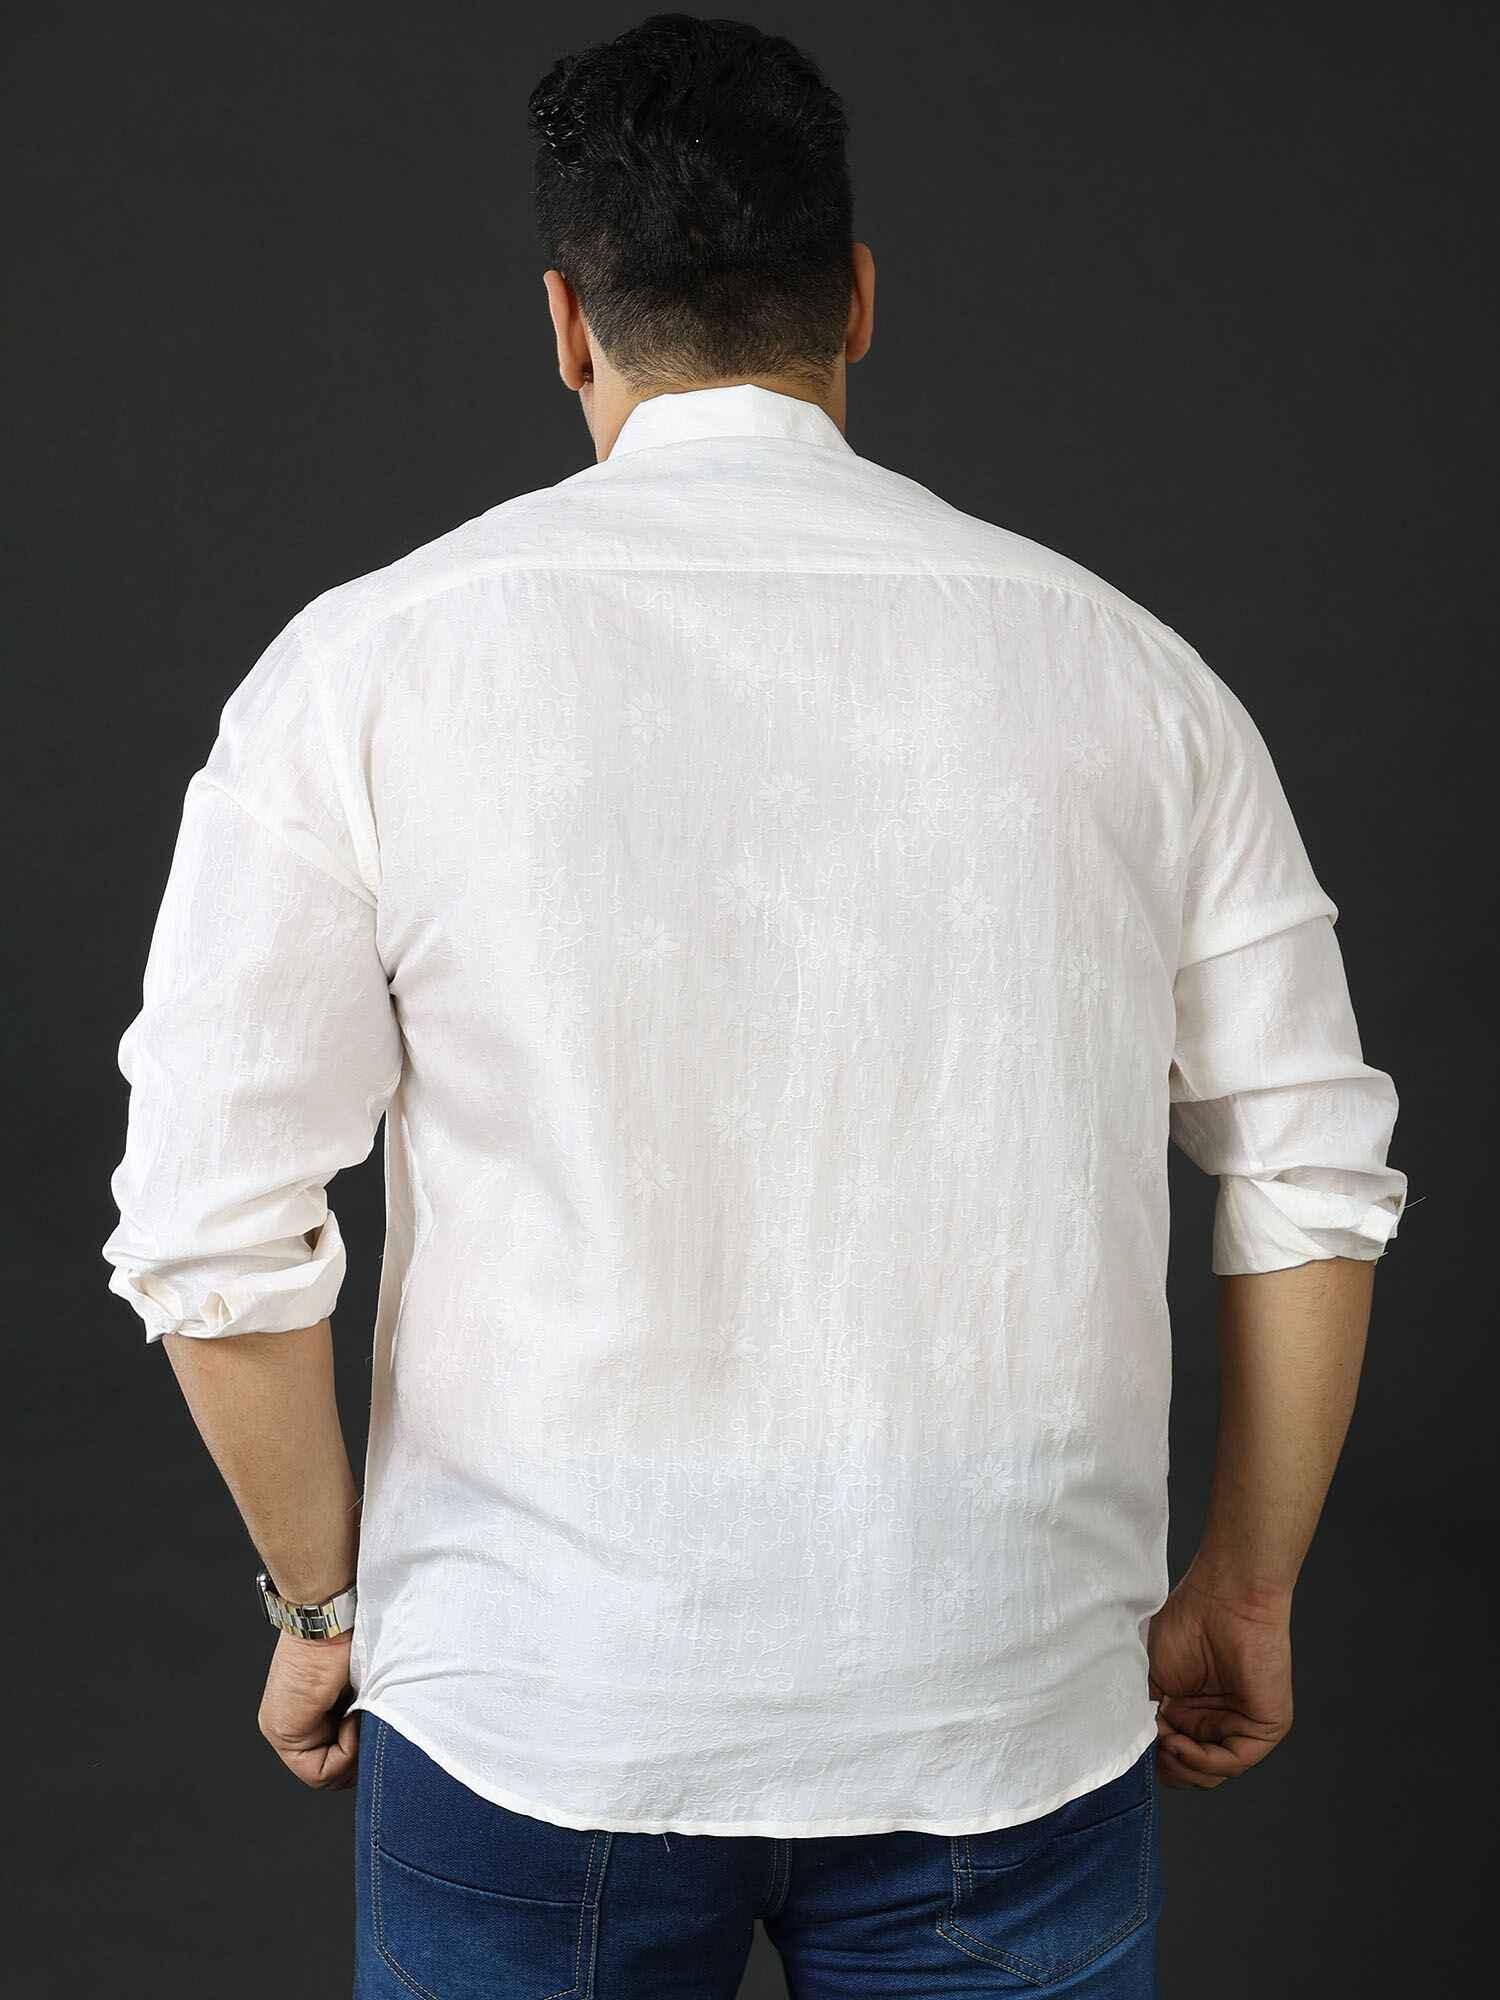 Premium Pearl White Jacquard Silk Full Shirt Men's Plus size - Guniaa Fashions